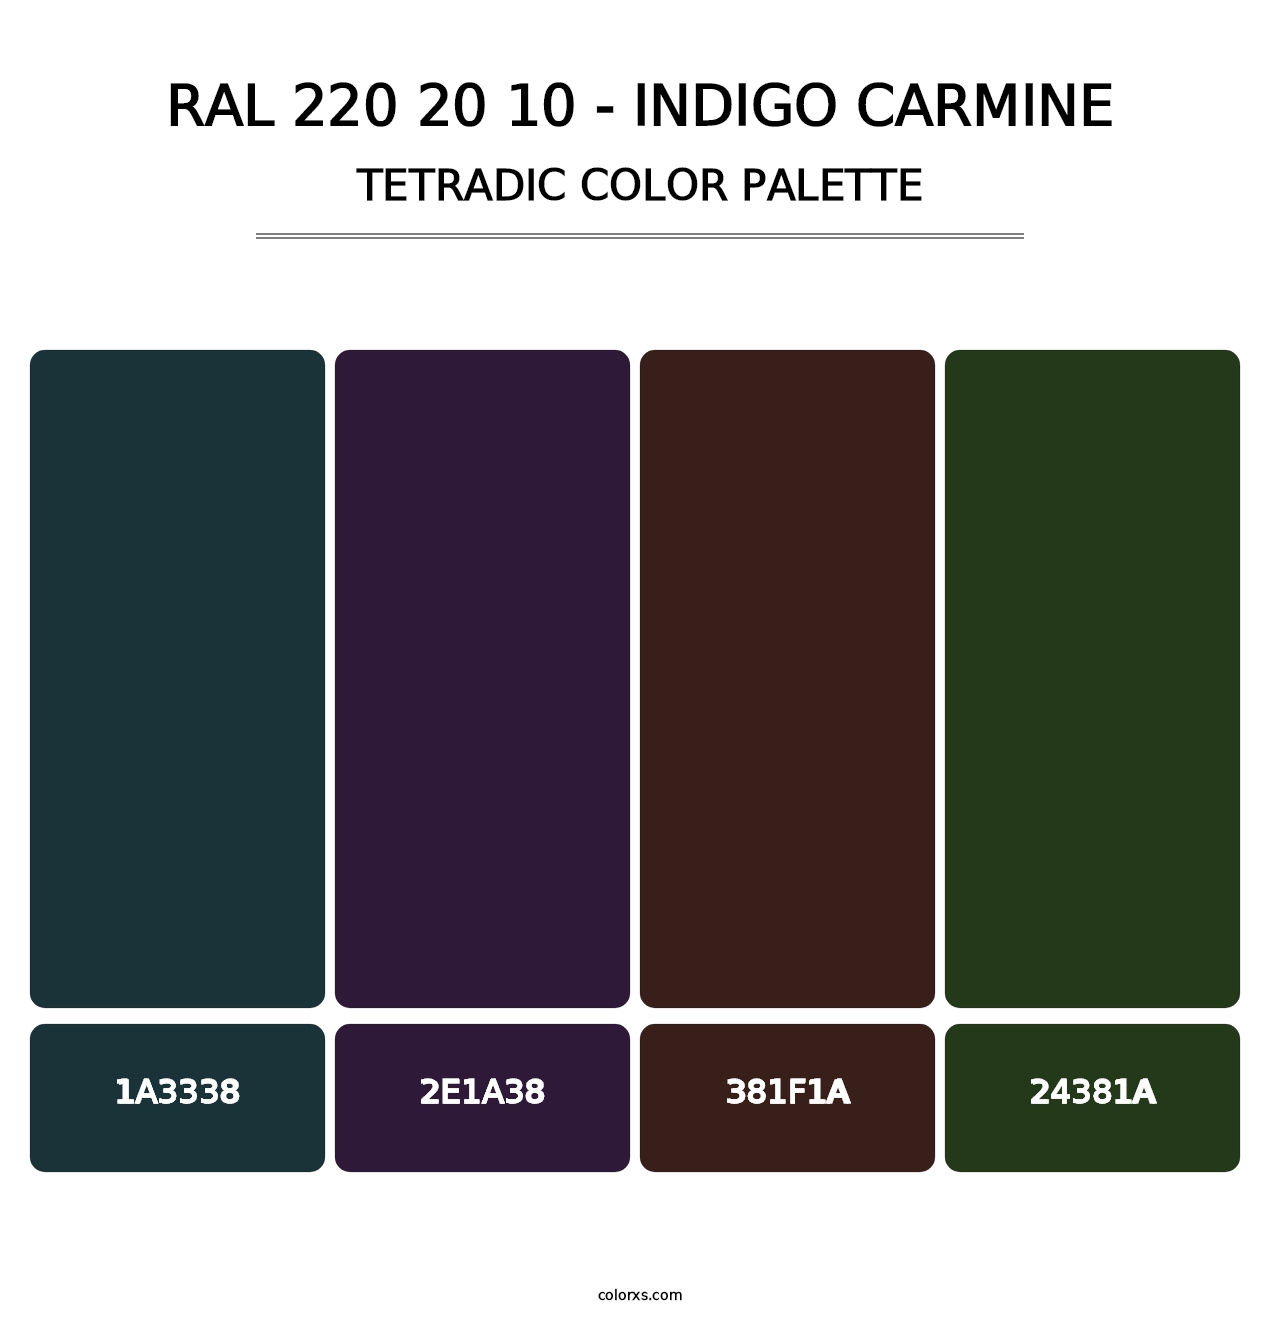 RAL 220 20 10 - Indigo Carmine - Tetradic Color Palette